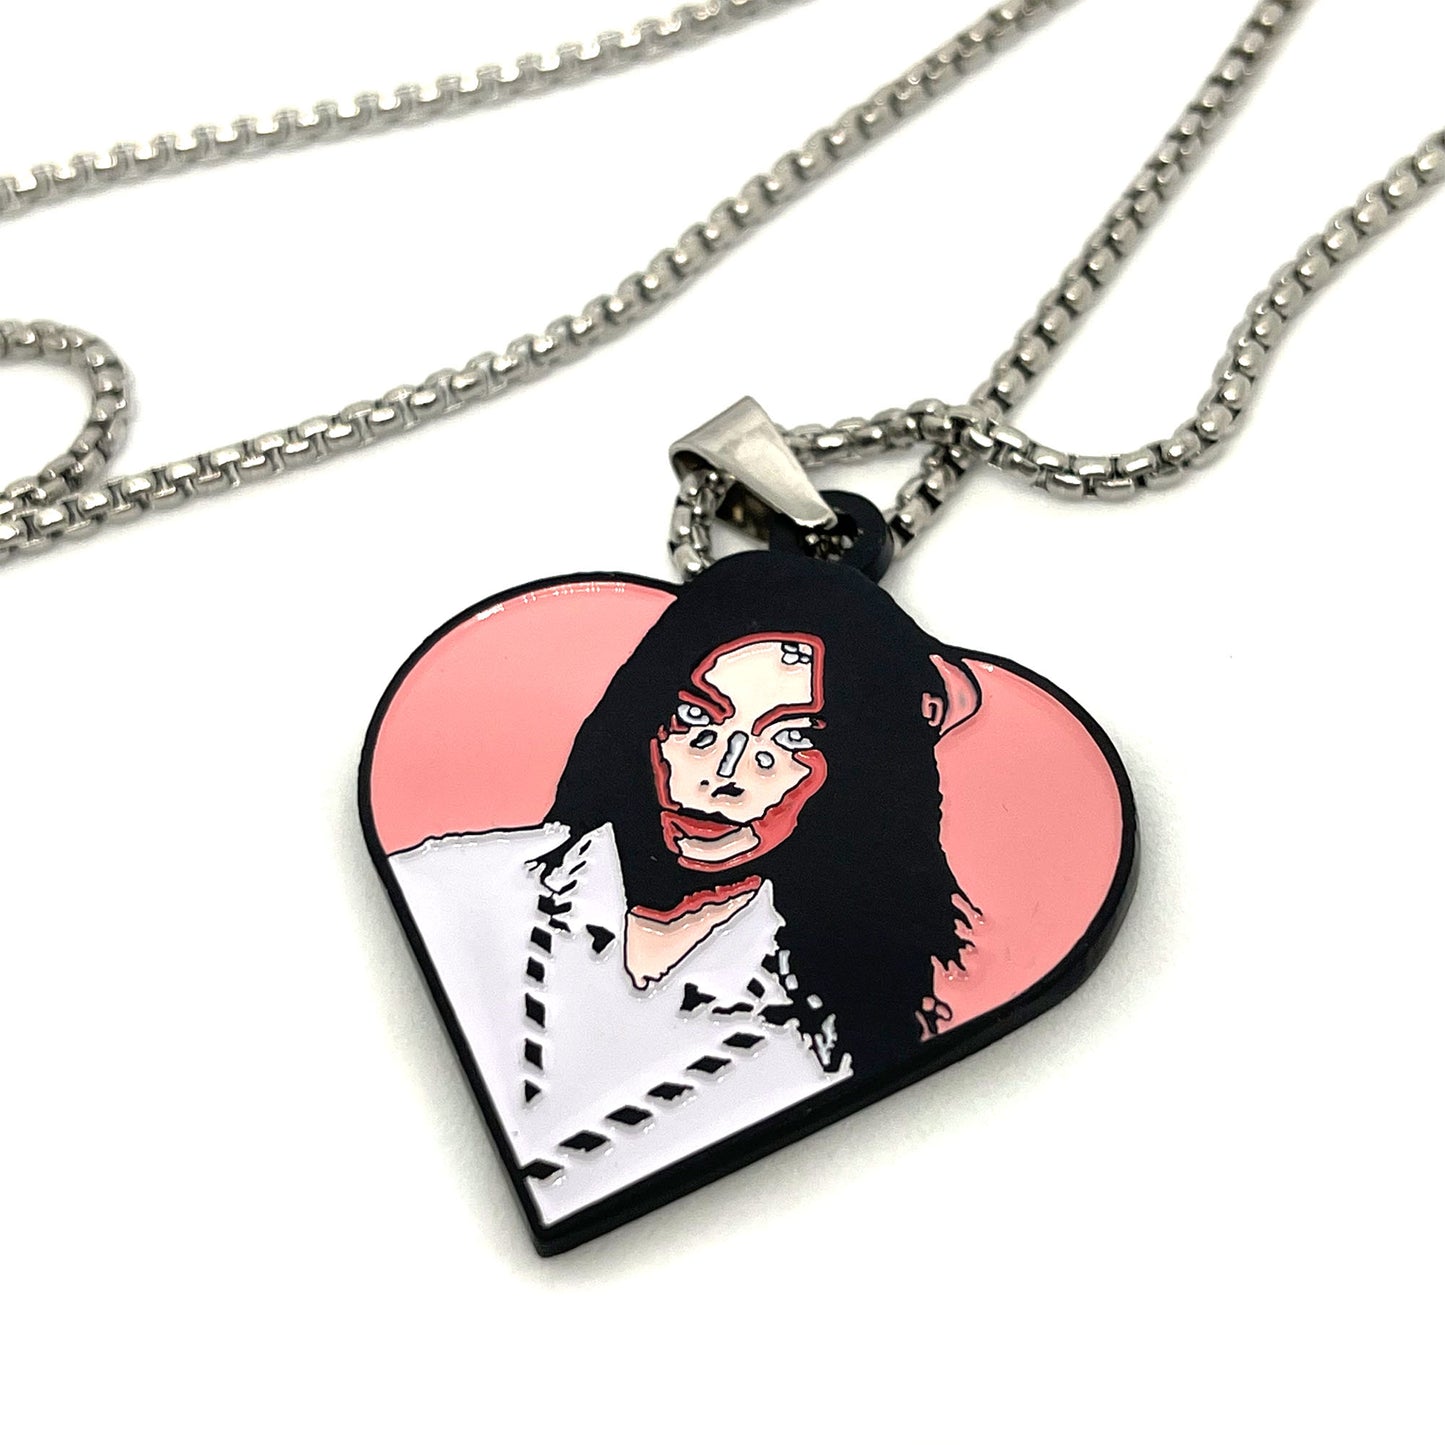 Björk "Post" Heart Fan-Made Enamel Pendant Chain Necklace – 60cm Stainless Steel Chain